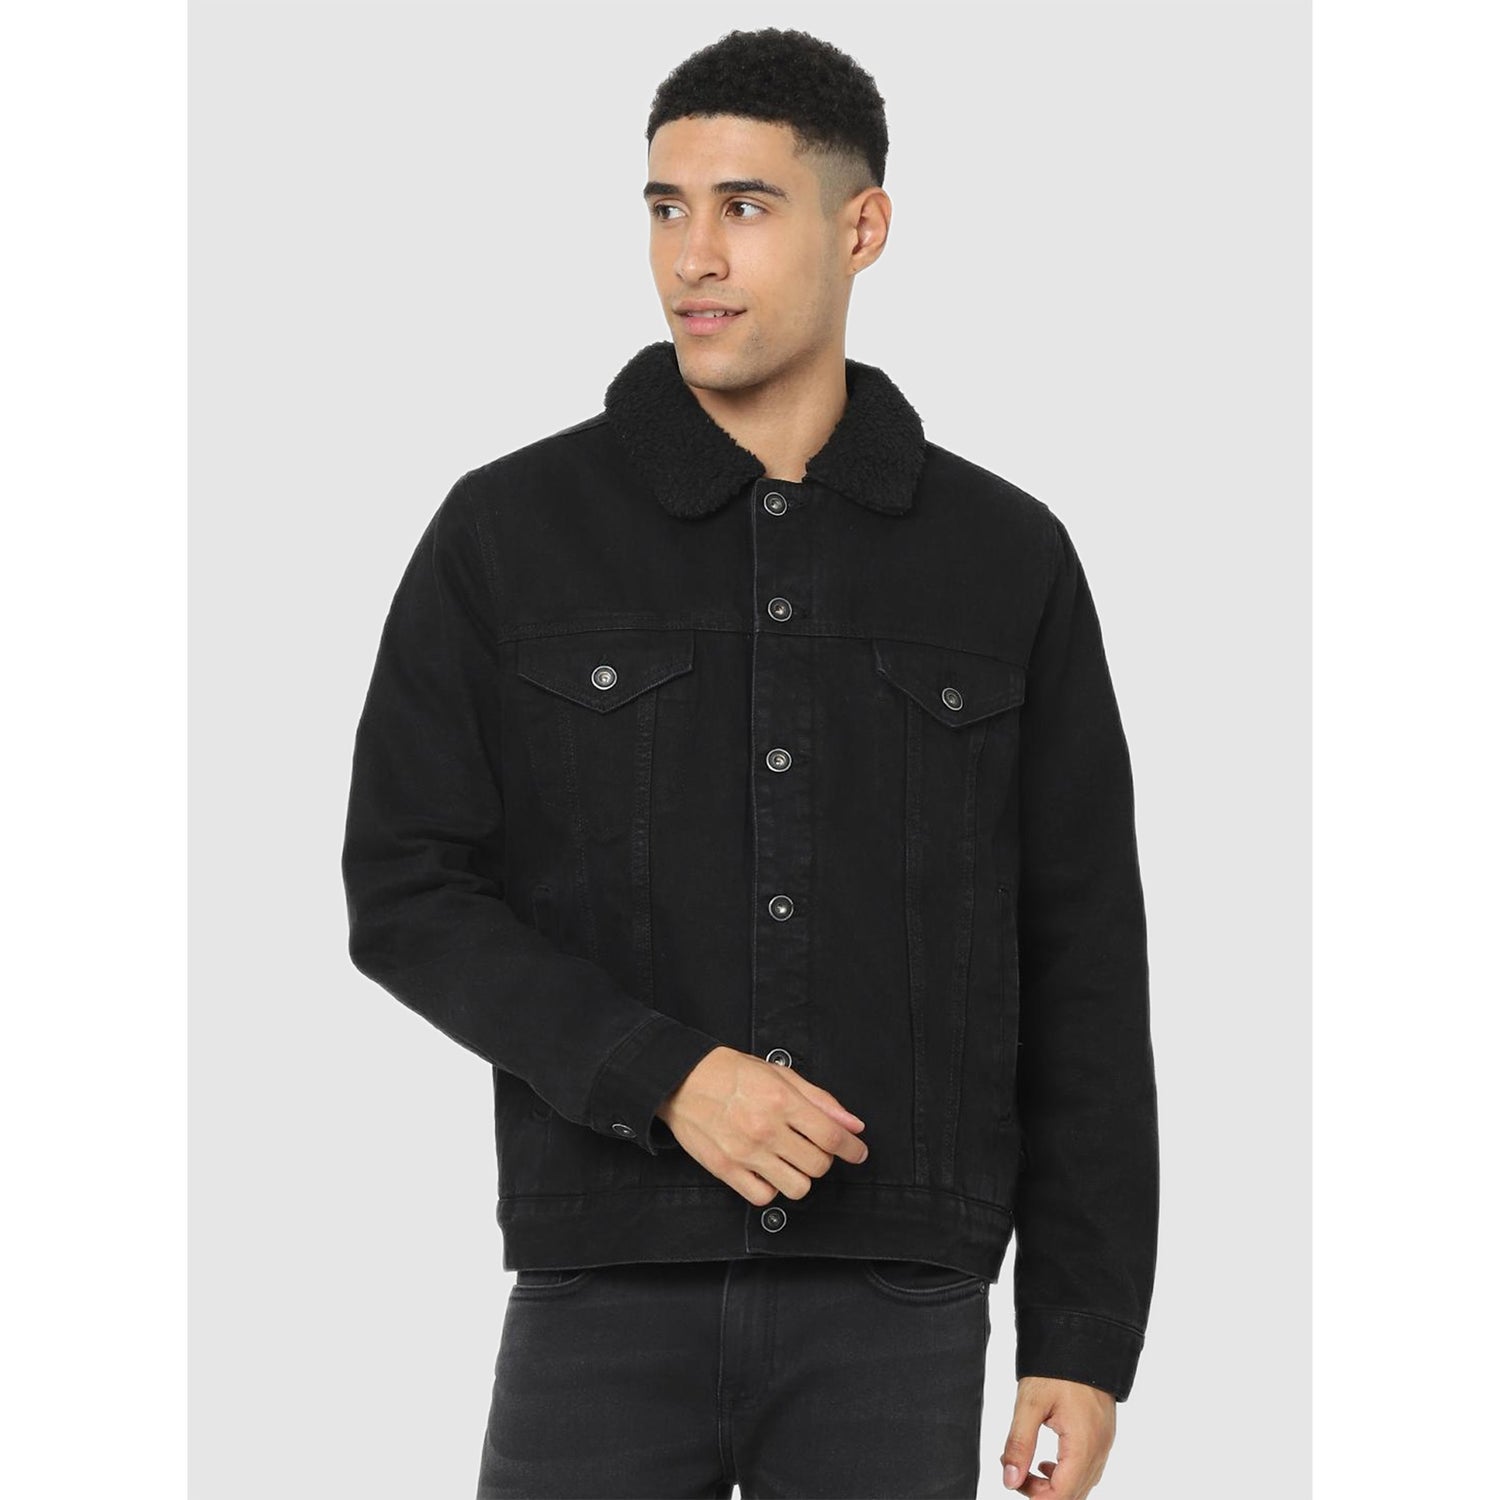 Black Solid Regular Fit Jacket (Various Sizes)